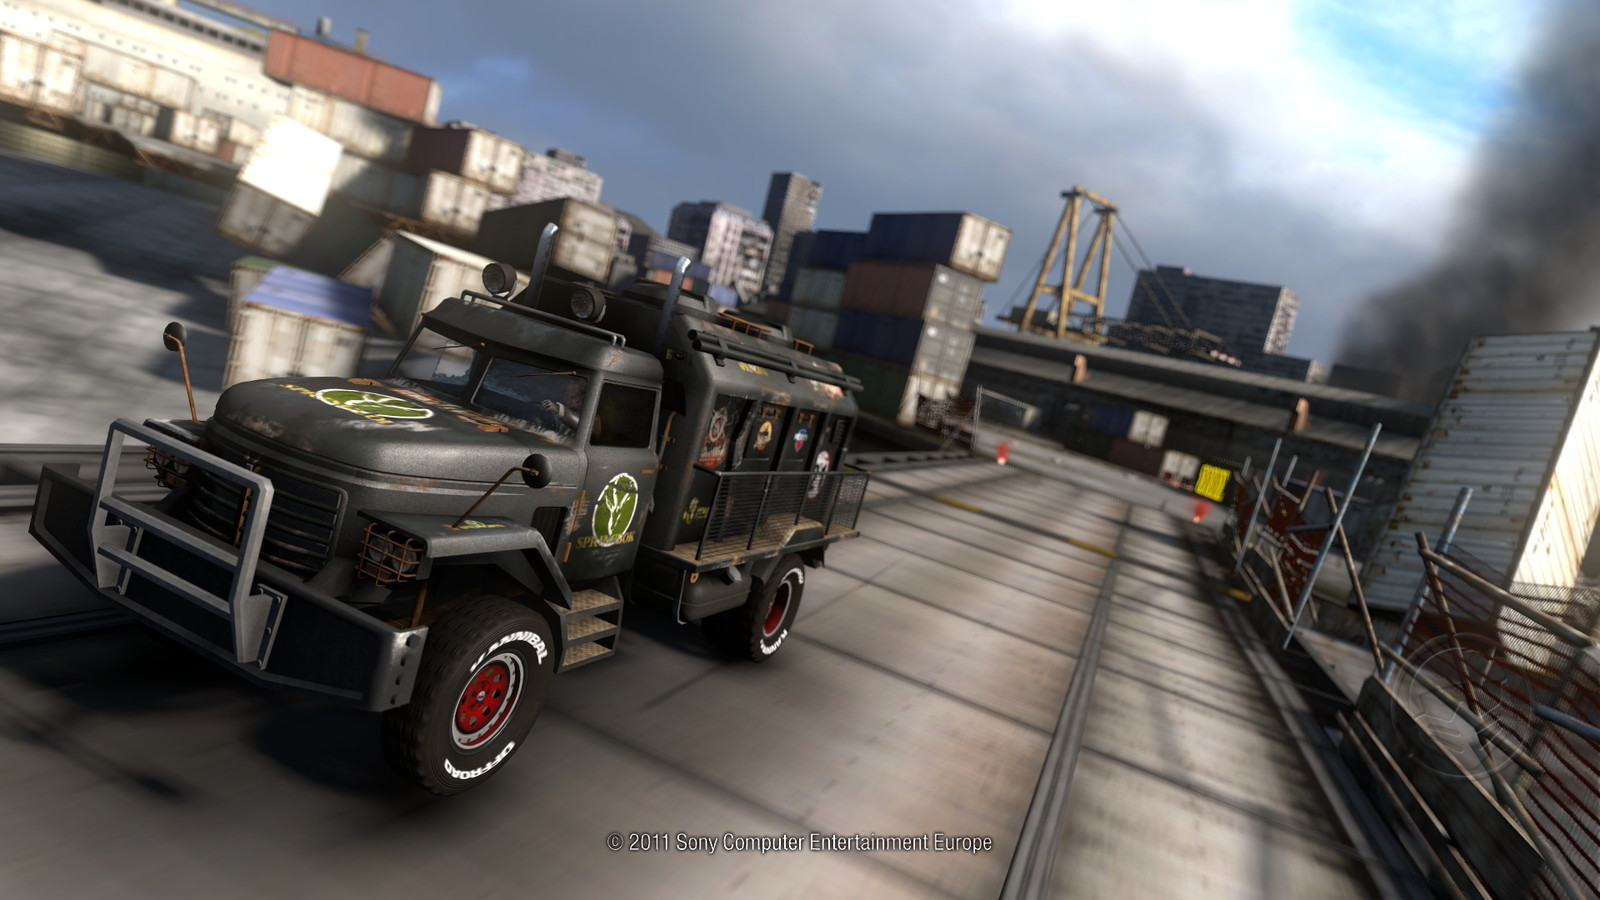 Molotov Shelka
(In-game screenshot)